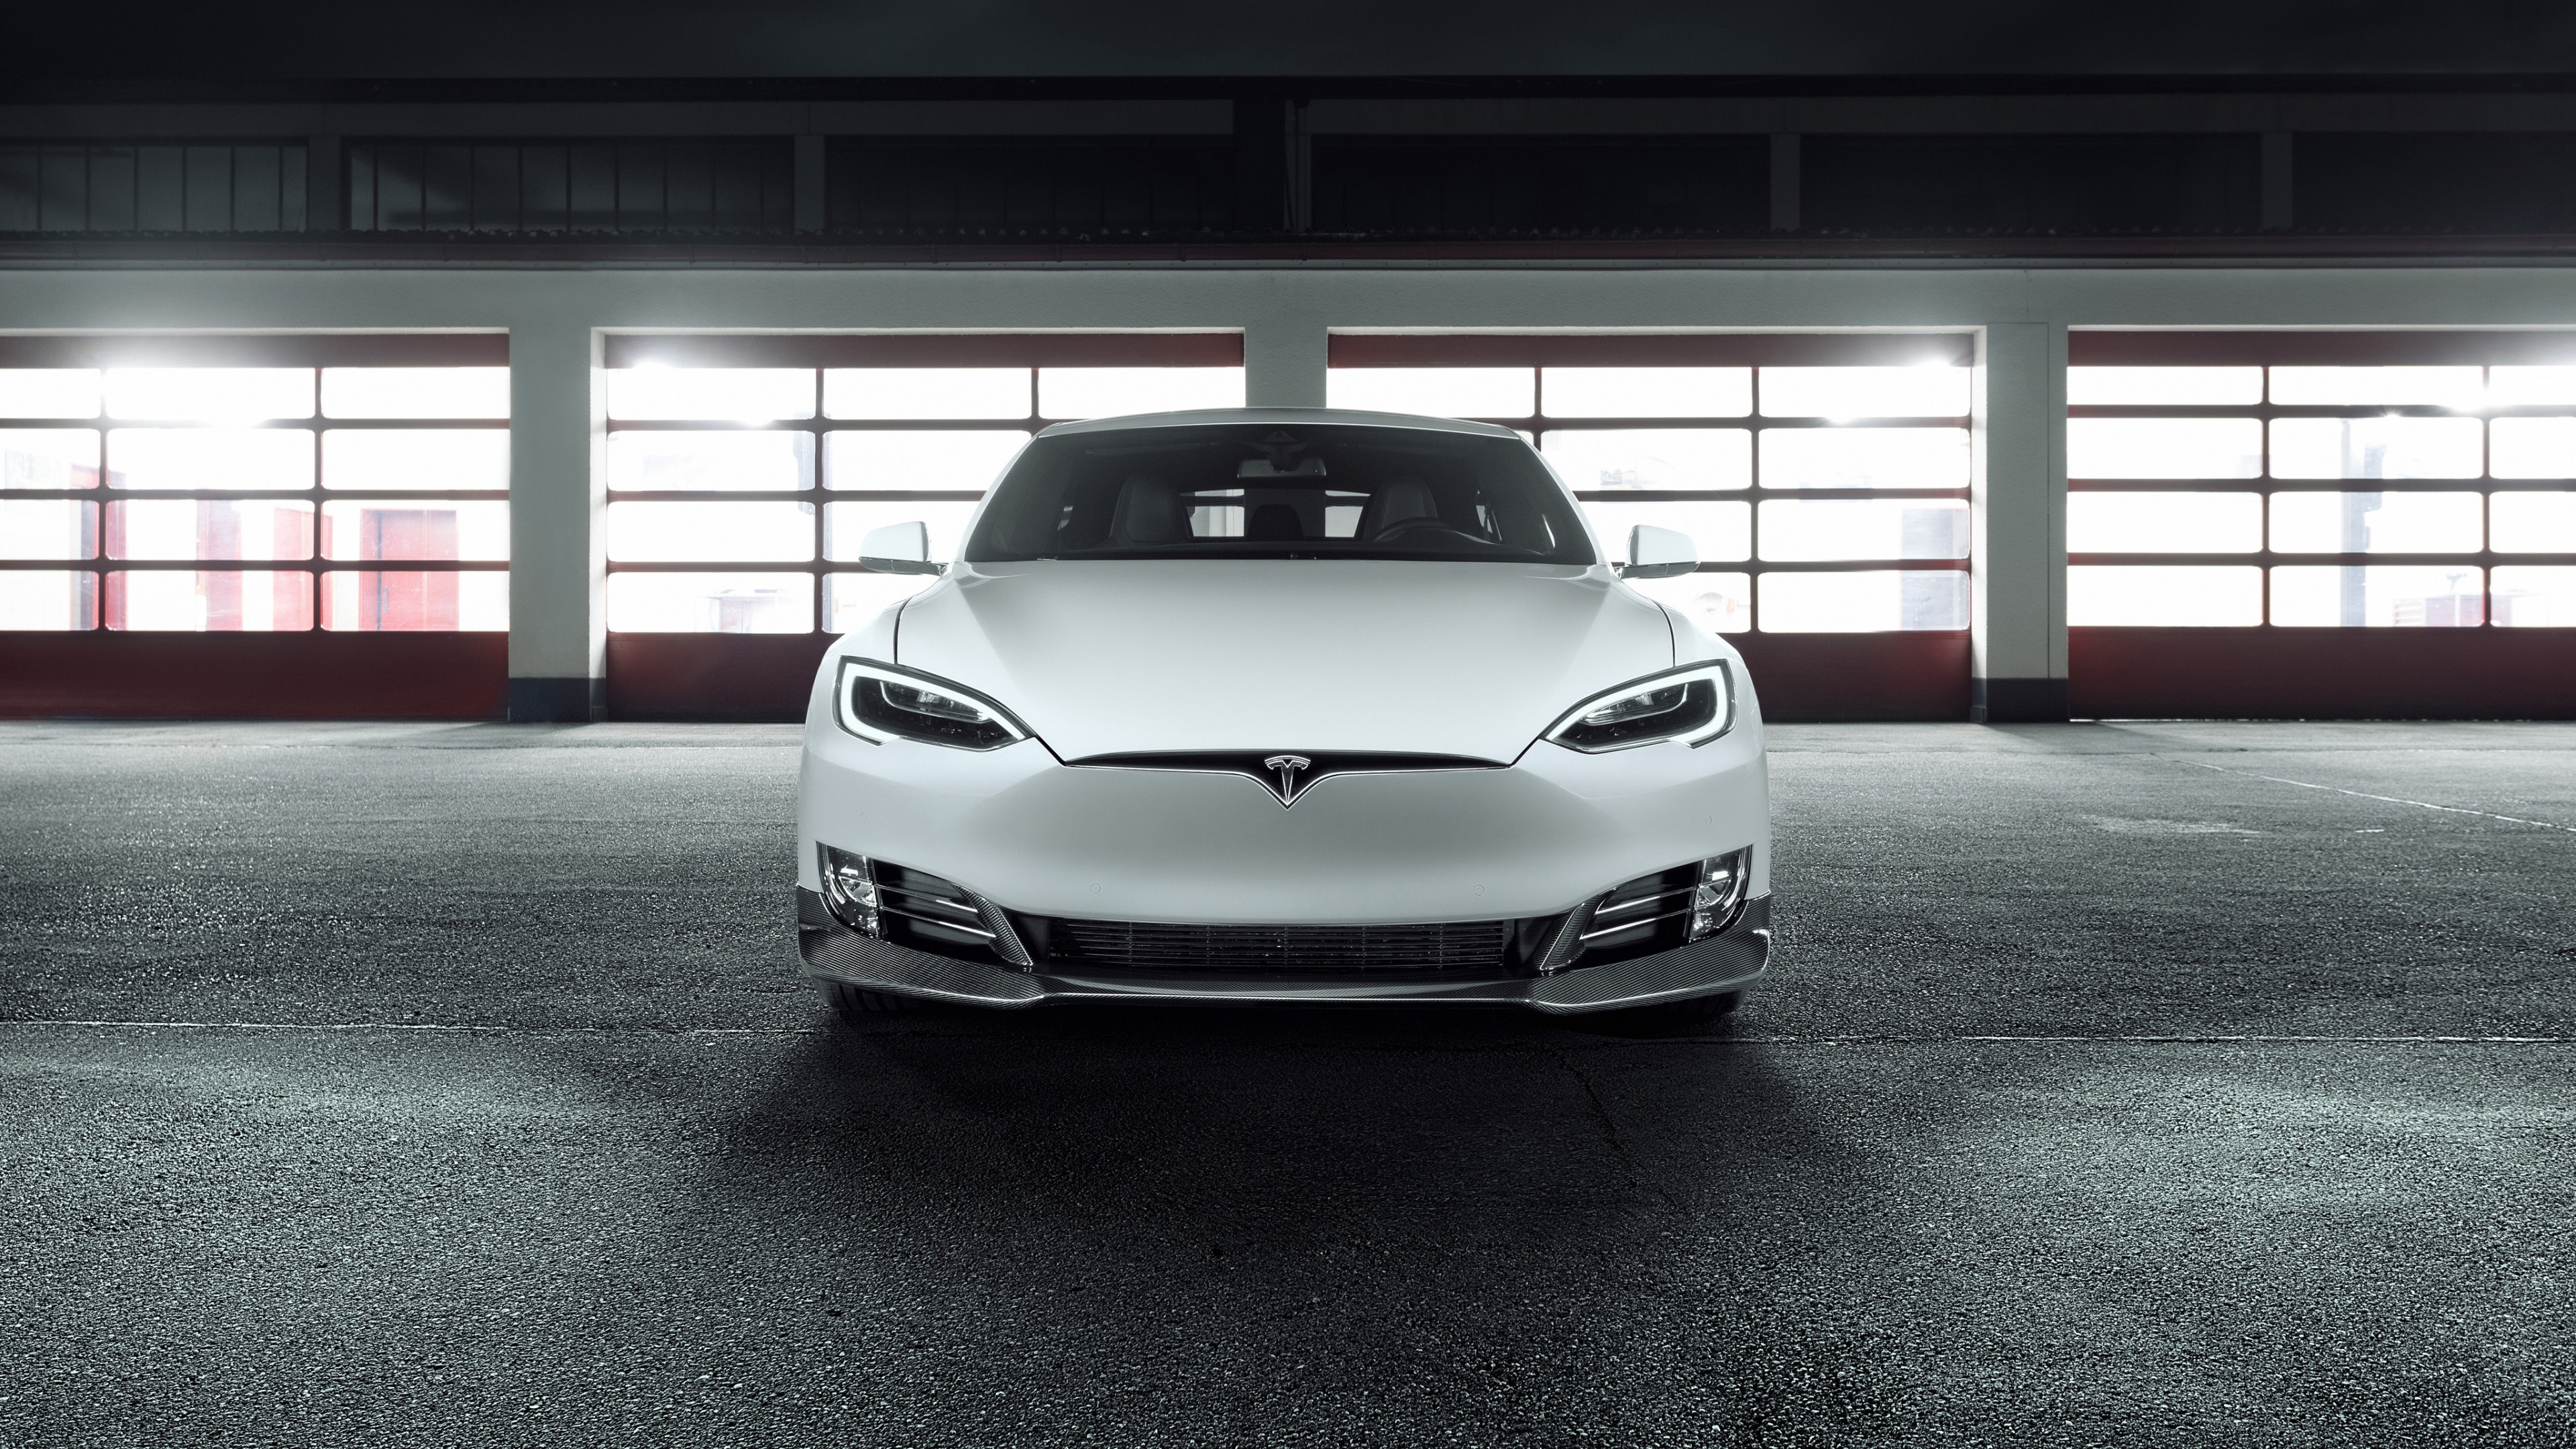 2017 Novitec Tesla Model S 4k Wallpaper Hd Car Wallpapers Id 9302